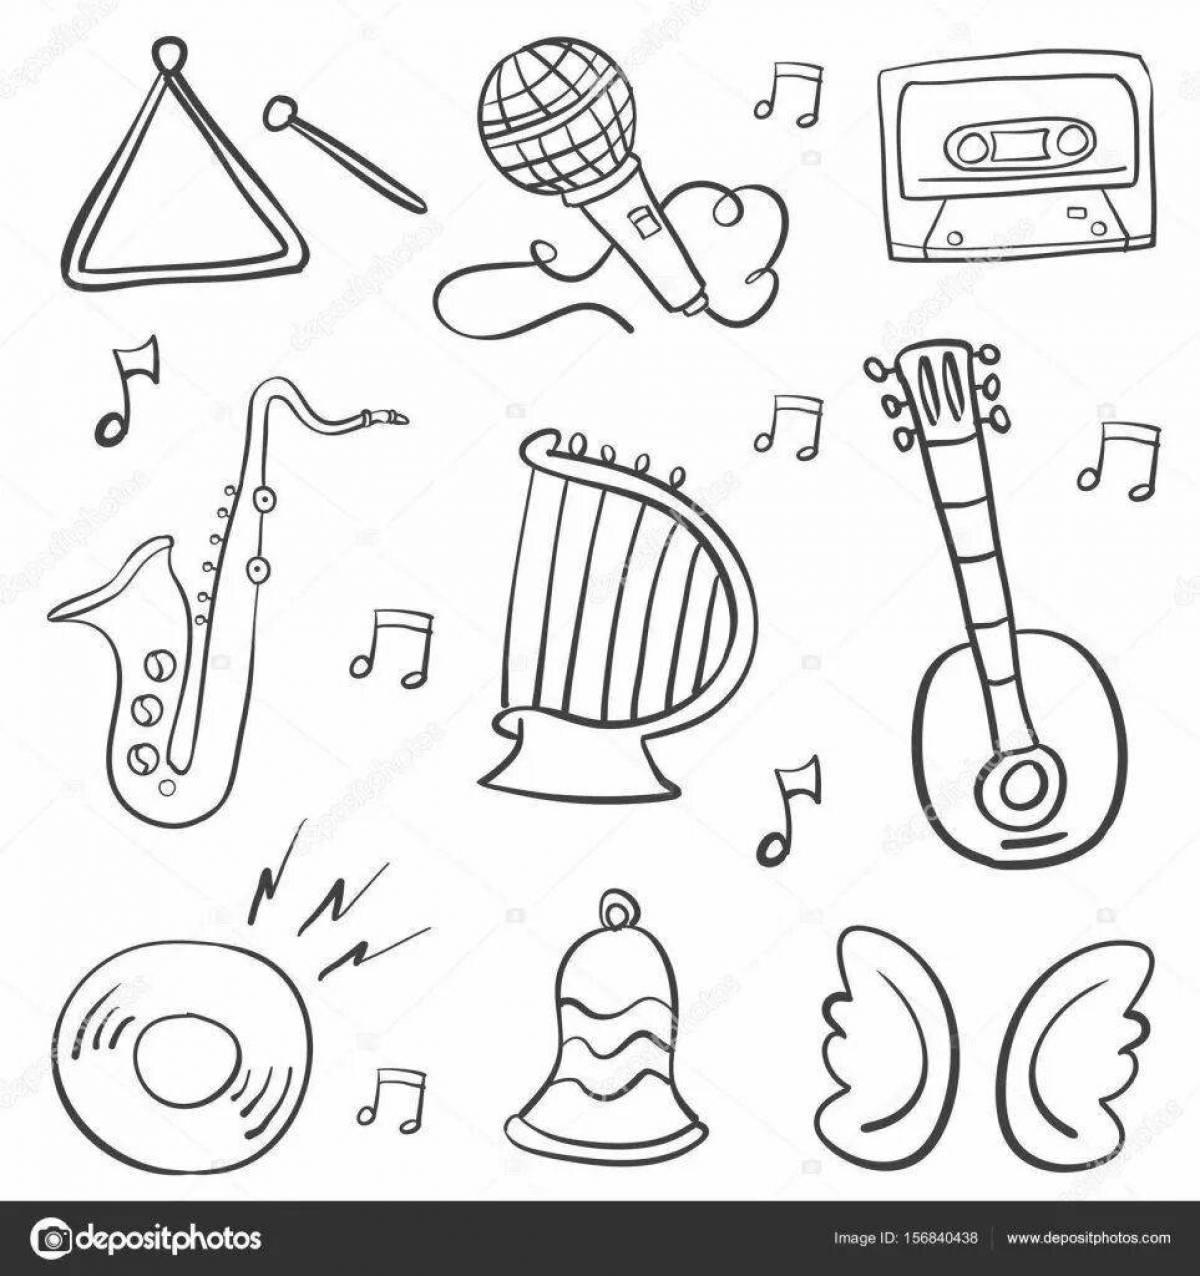 Distinctive musical instruments grade 2 coloring book